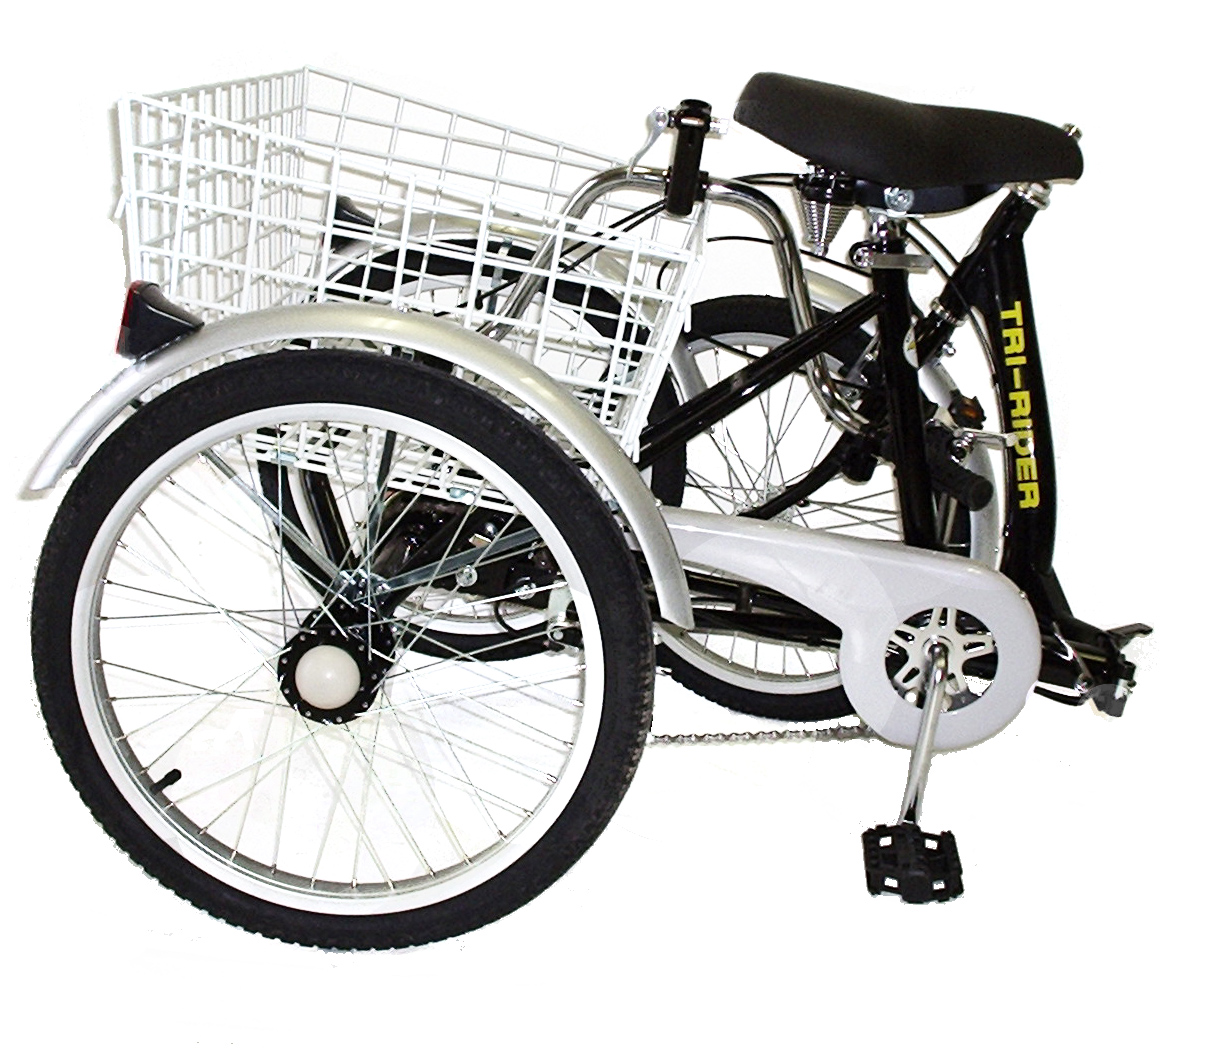 folding tricycle bike